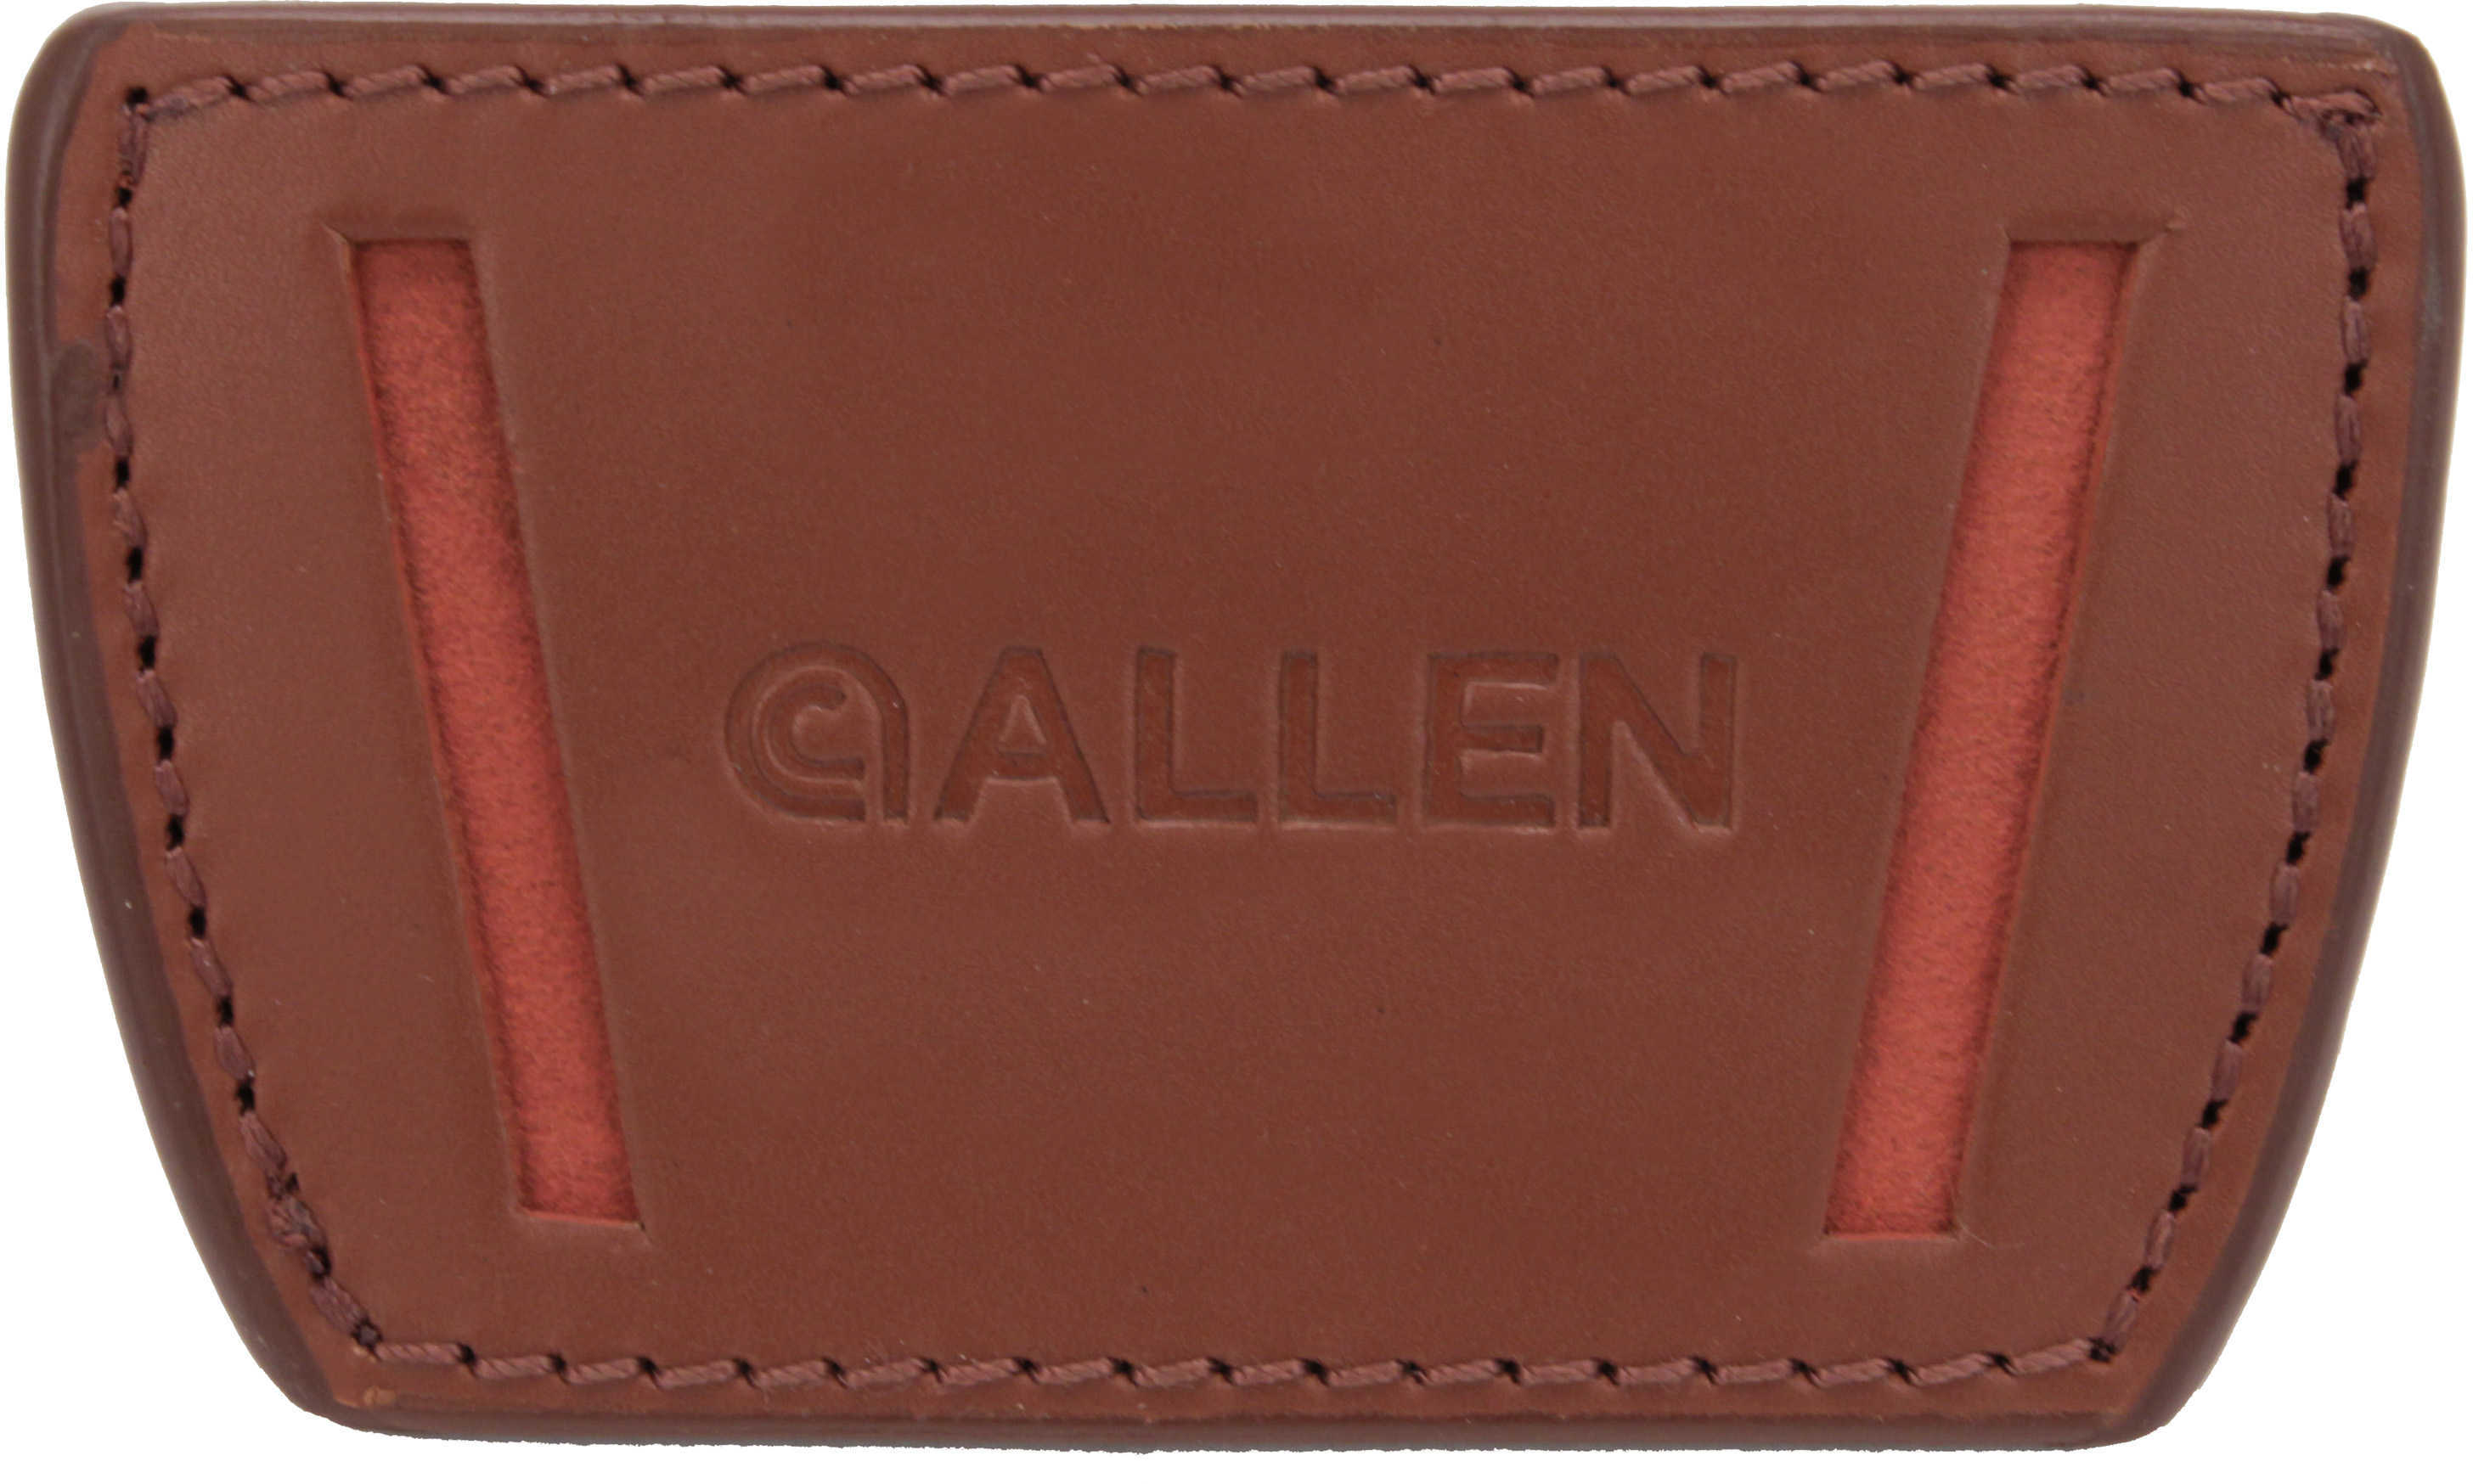 Allen Cases Glenwood Belt Slide Leather Holster Medium, Brown 44821